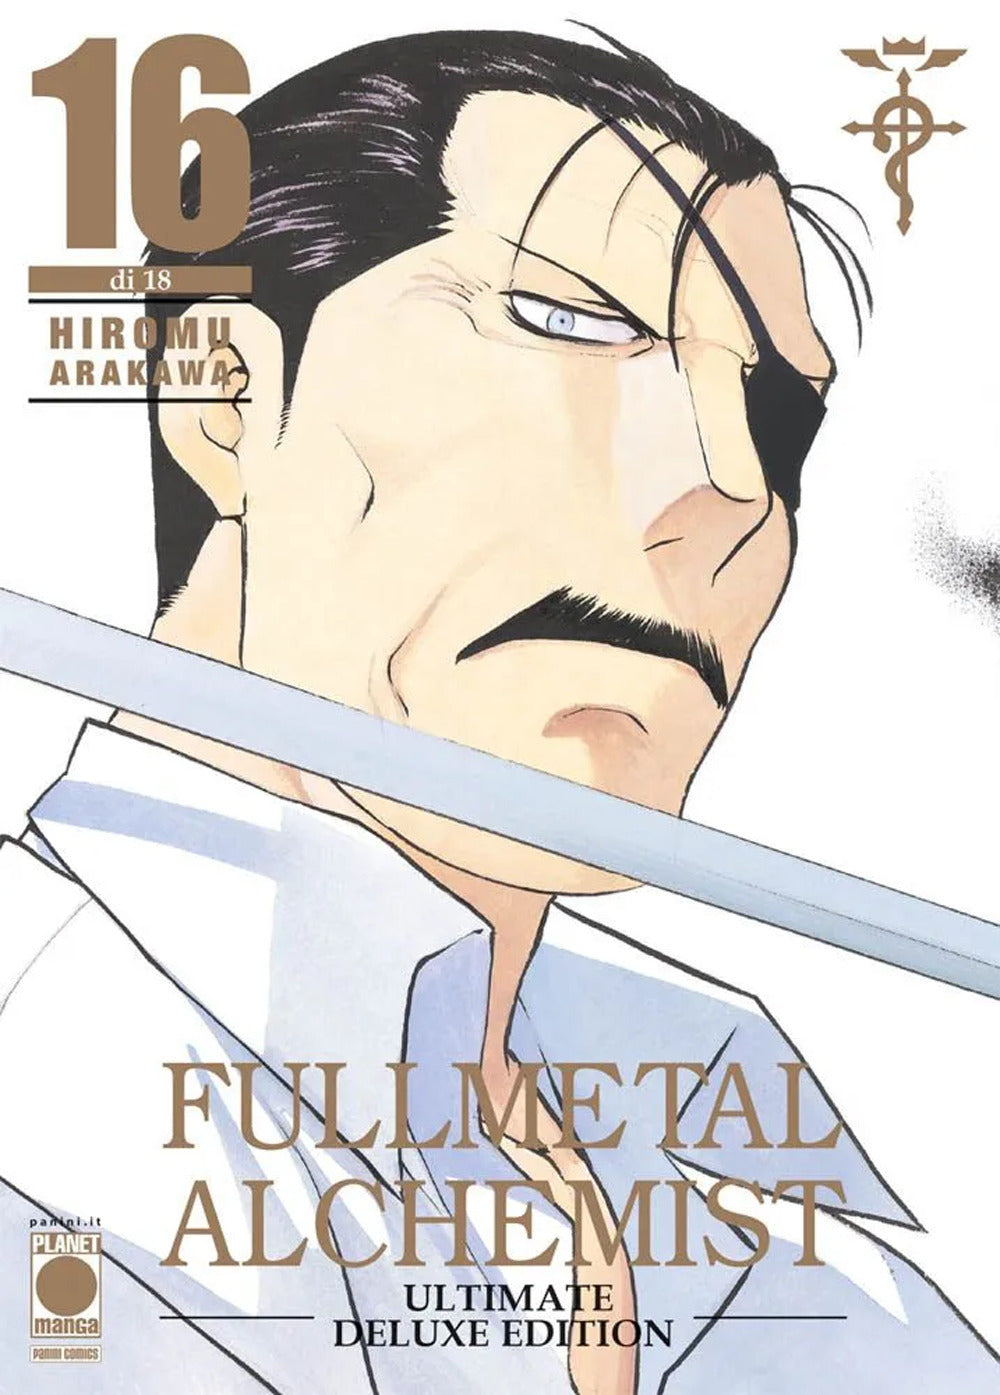 Fullmetal alchemist. Ultimate deluxe edition. Vol. 16.